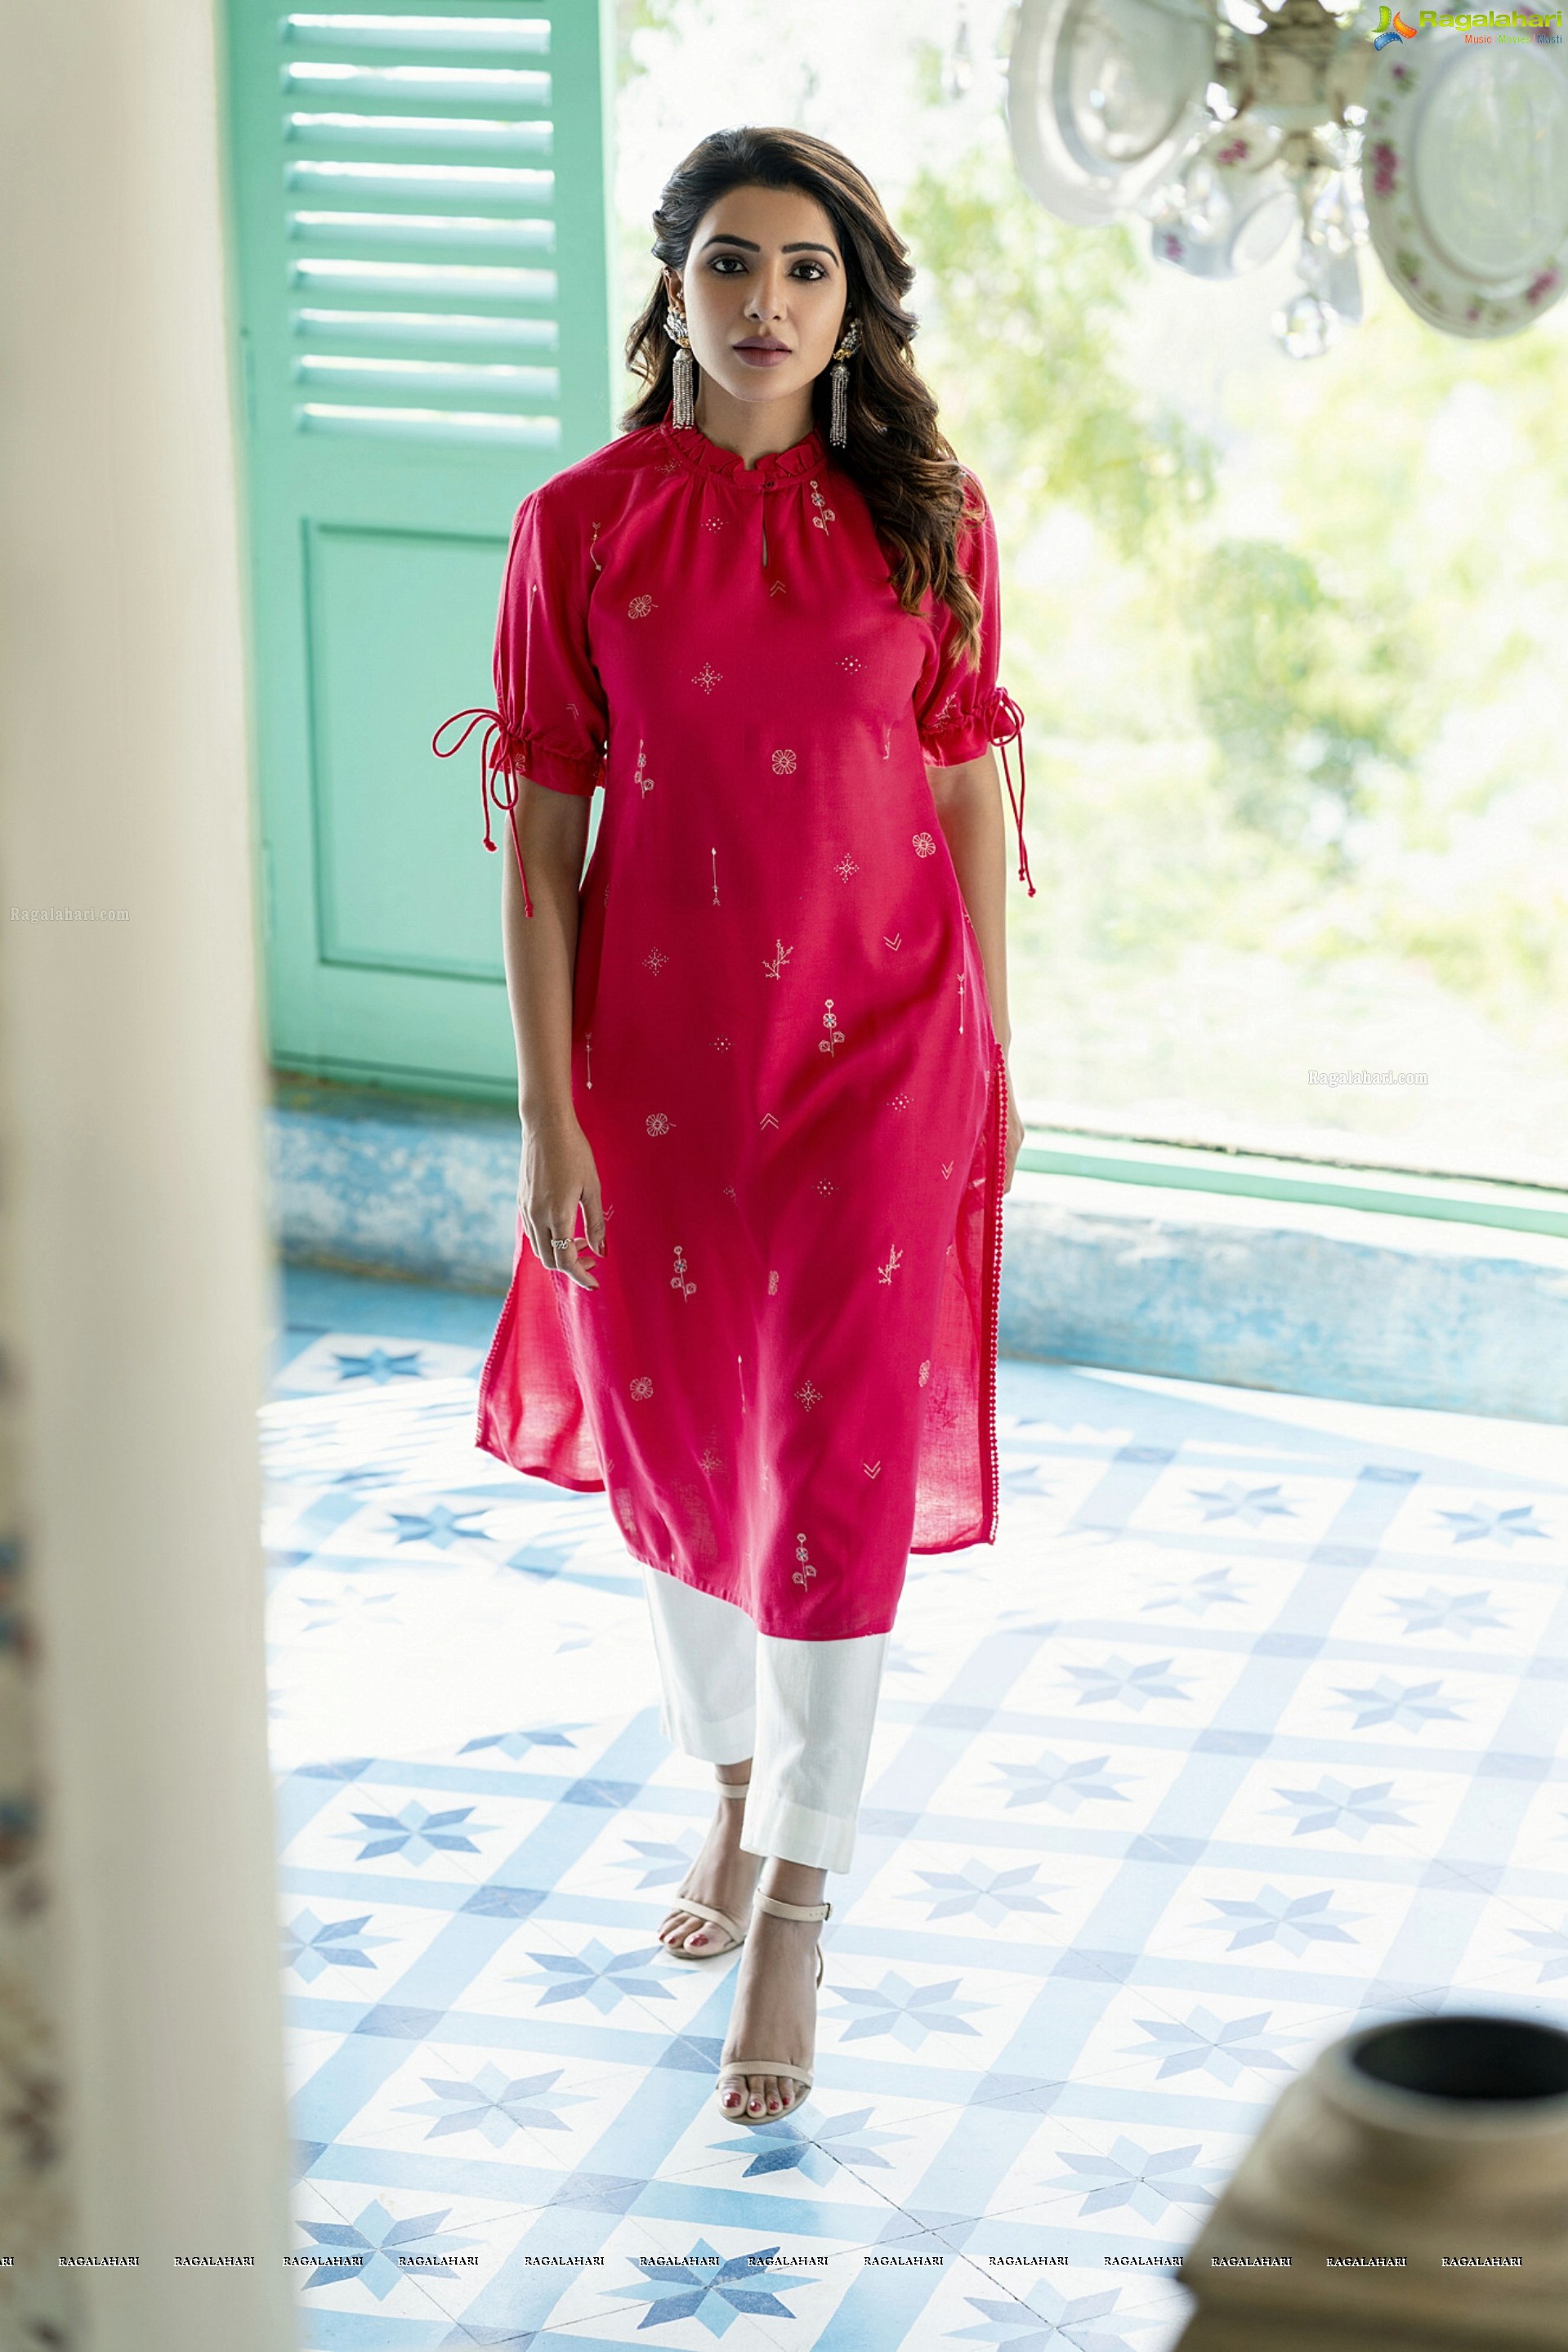 Samantha Akkineni Latest Photoshoot For Her Own Clothing Line Saaki, HD Stills